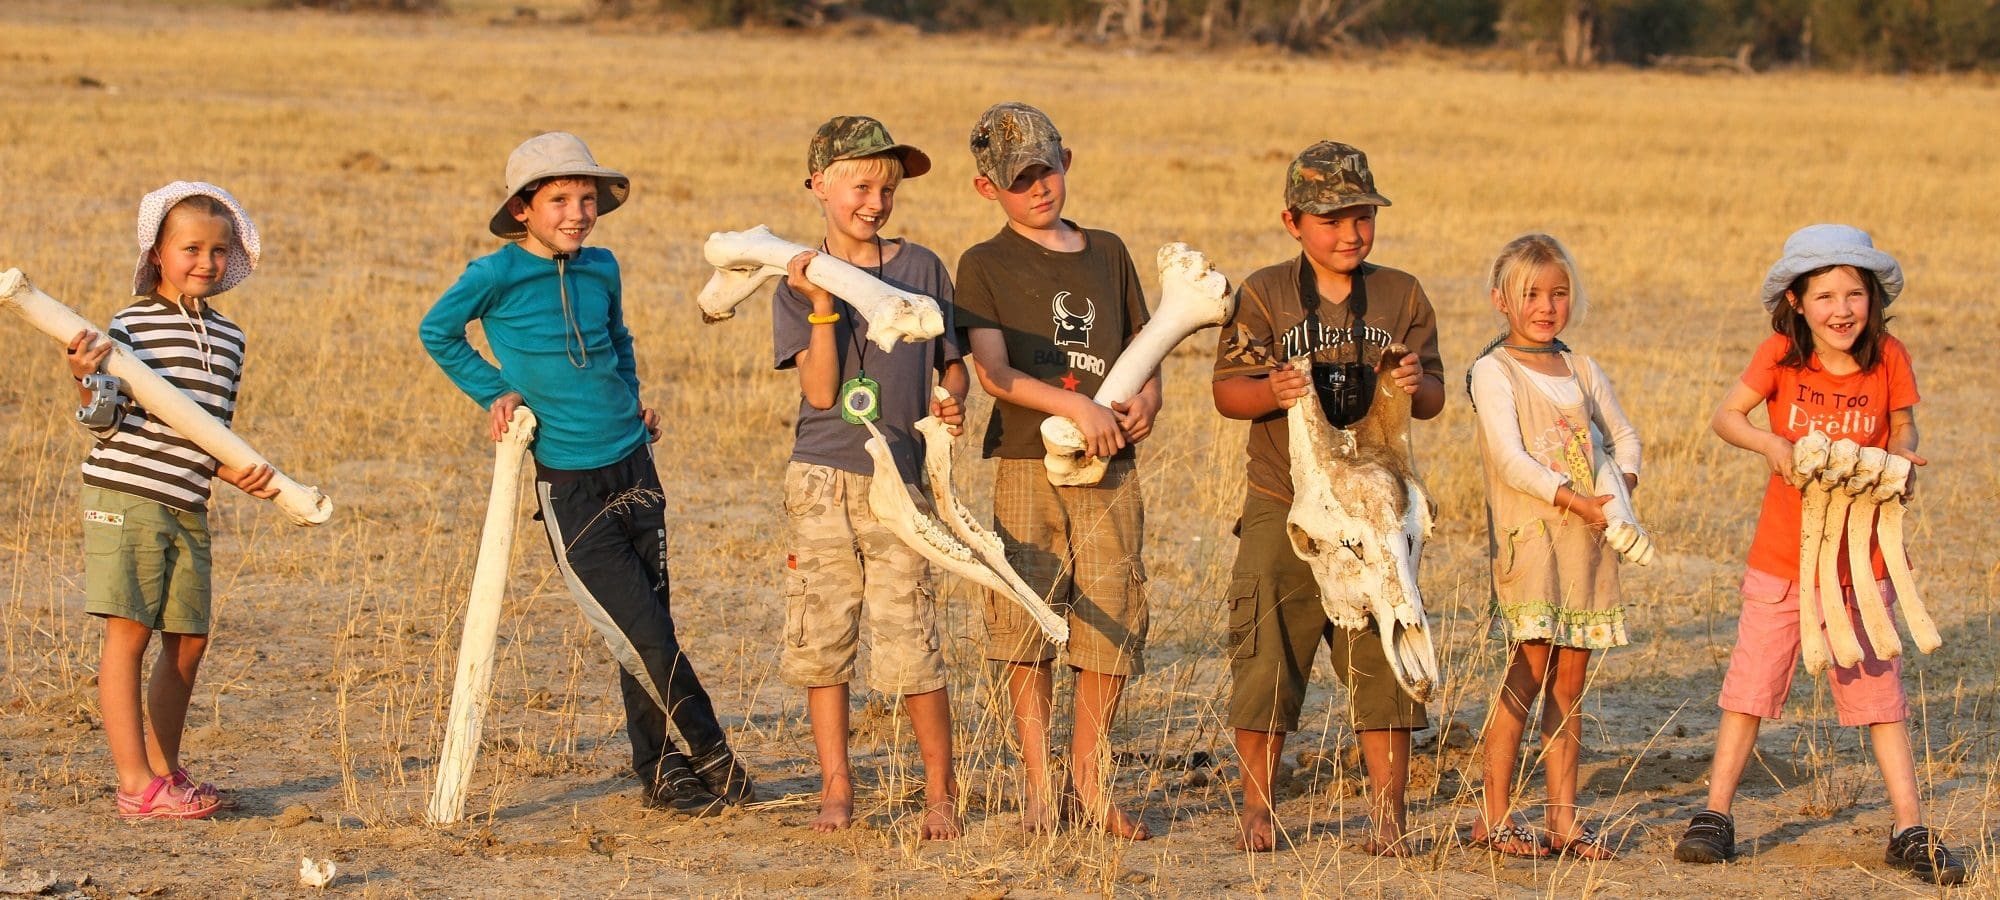 6 - Imvelo Safari Lodges - Kids on safari